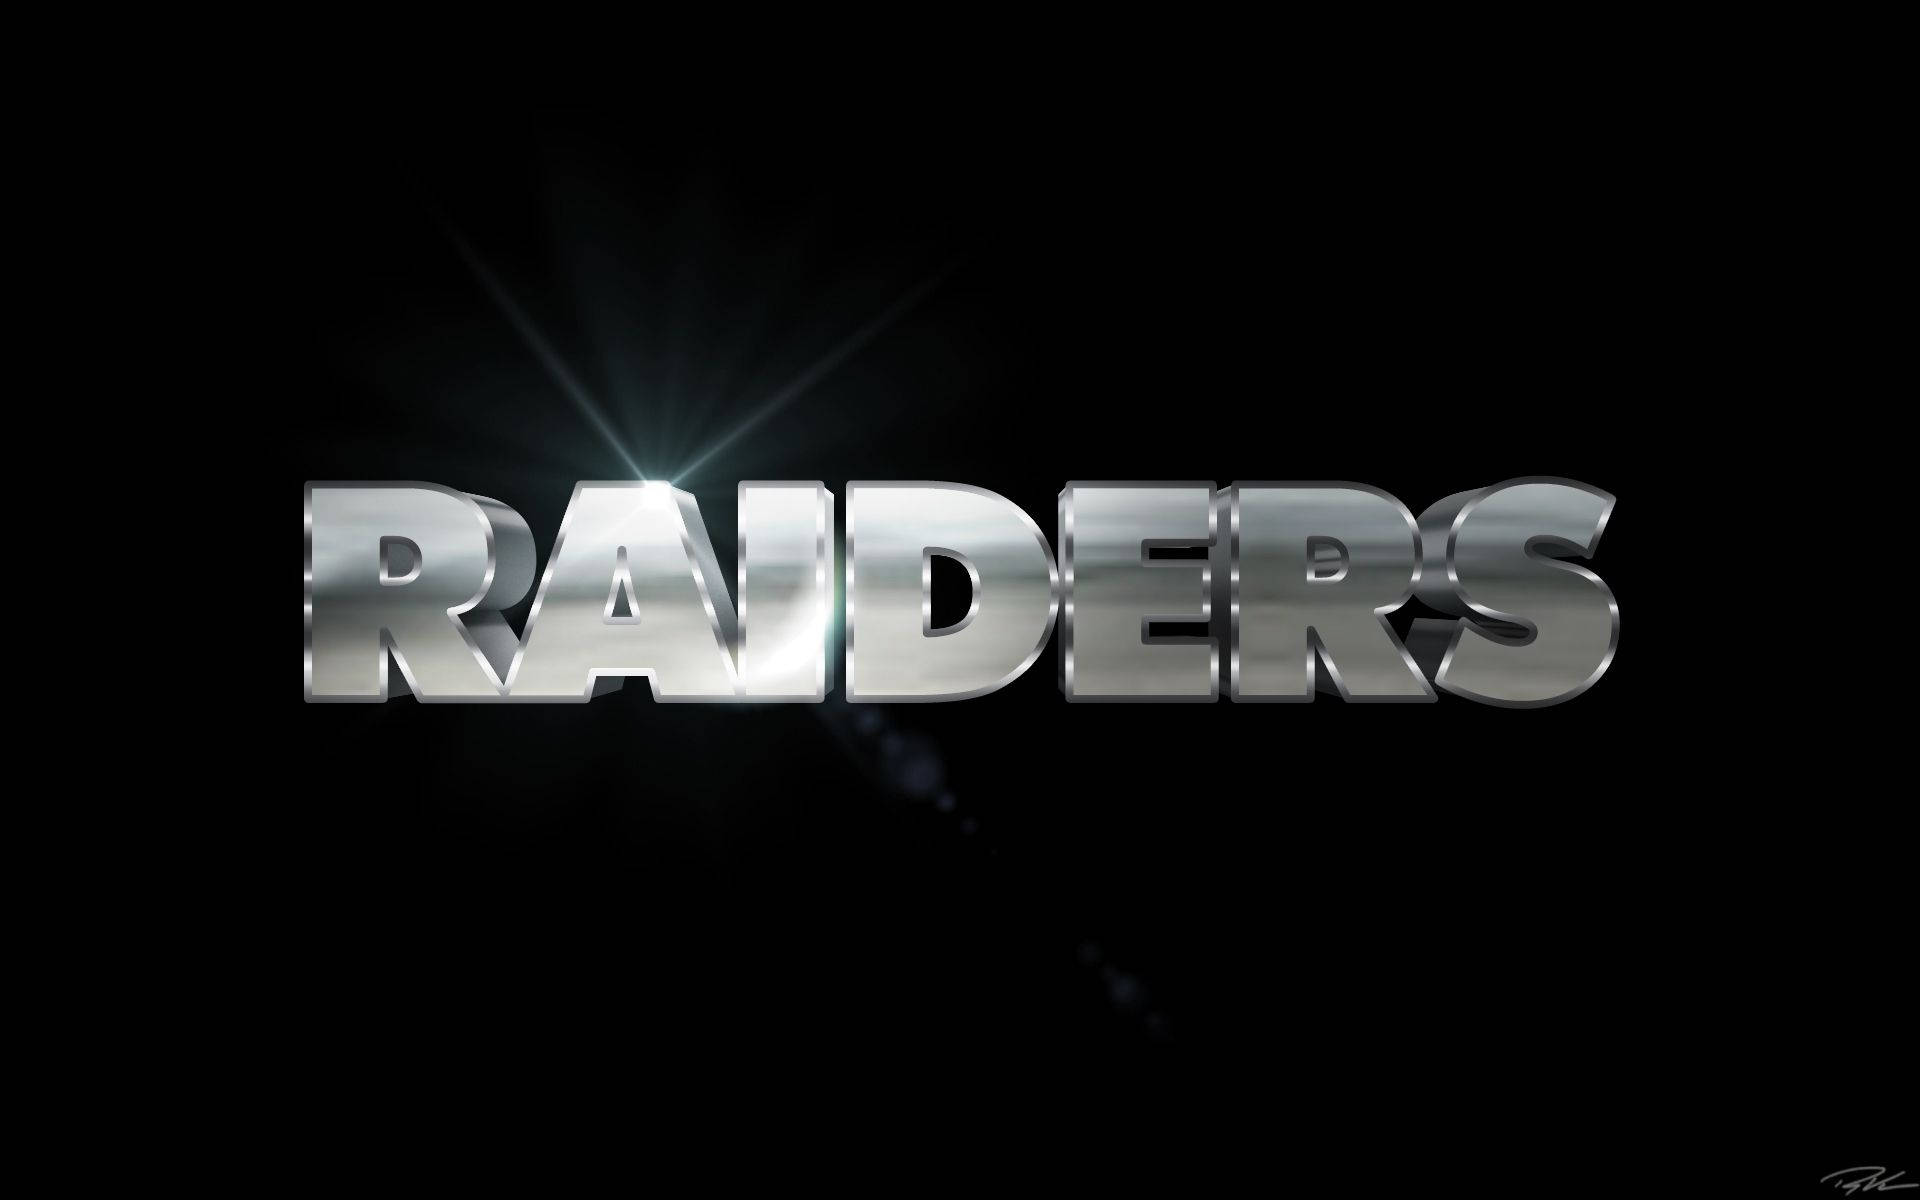 Silver Metallic Oakland Raiders Logo Background